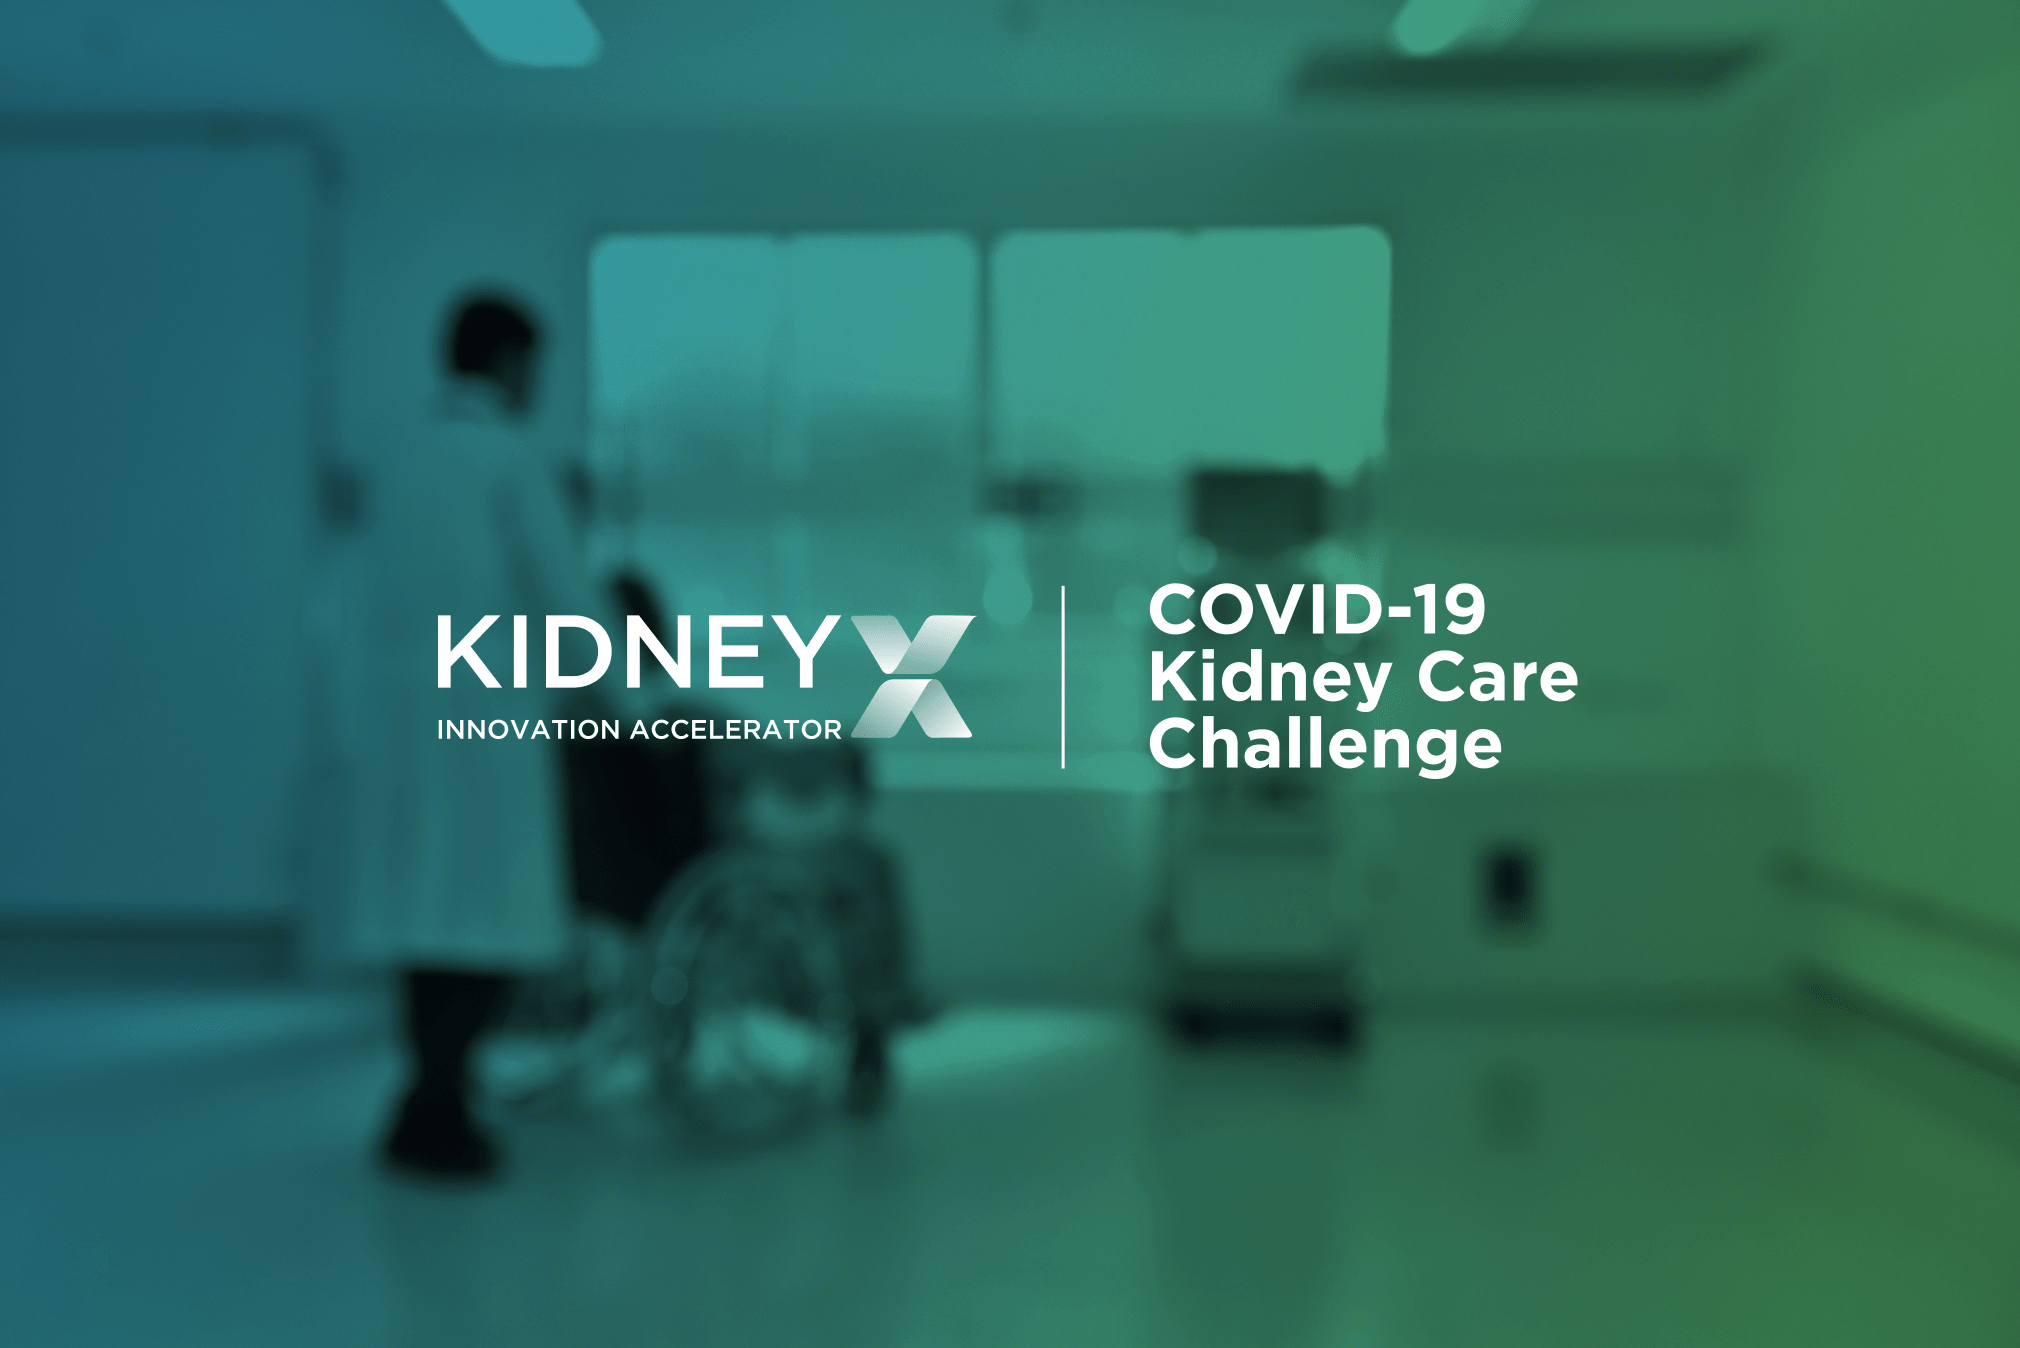 KidneyX COVID-19 Kidney Care Challenge